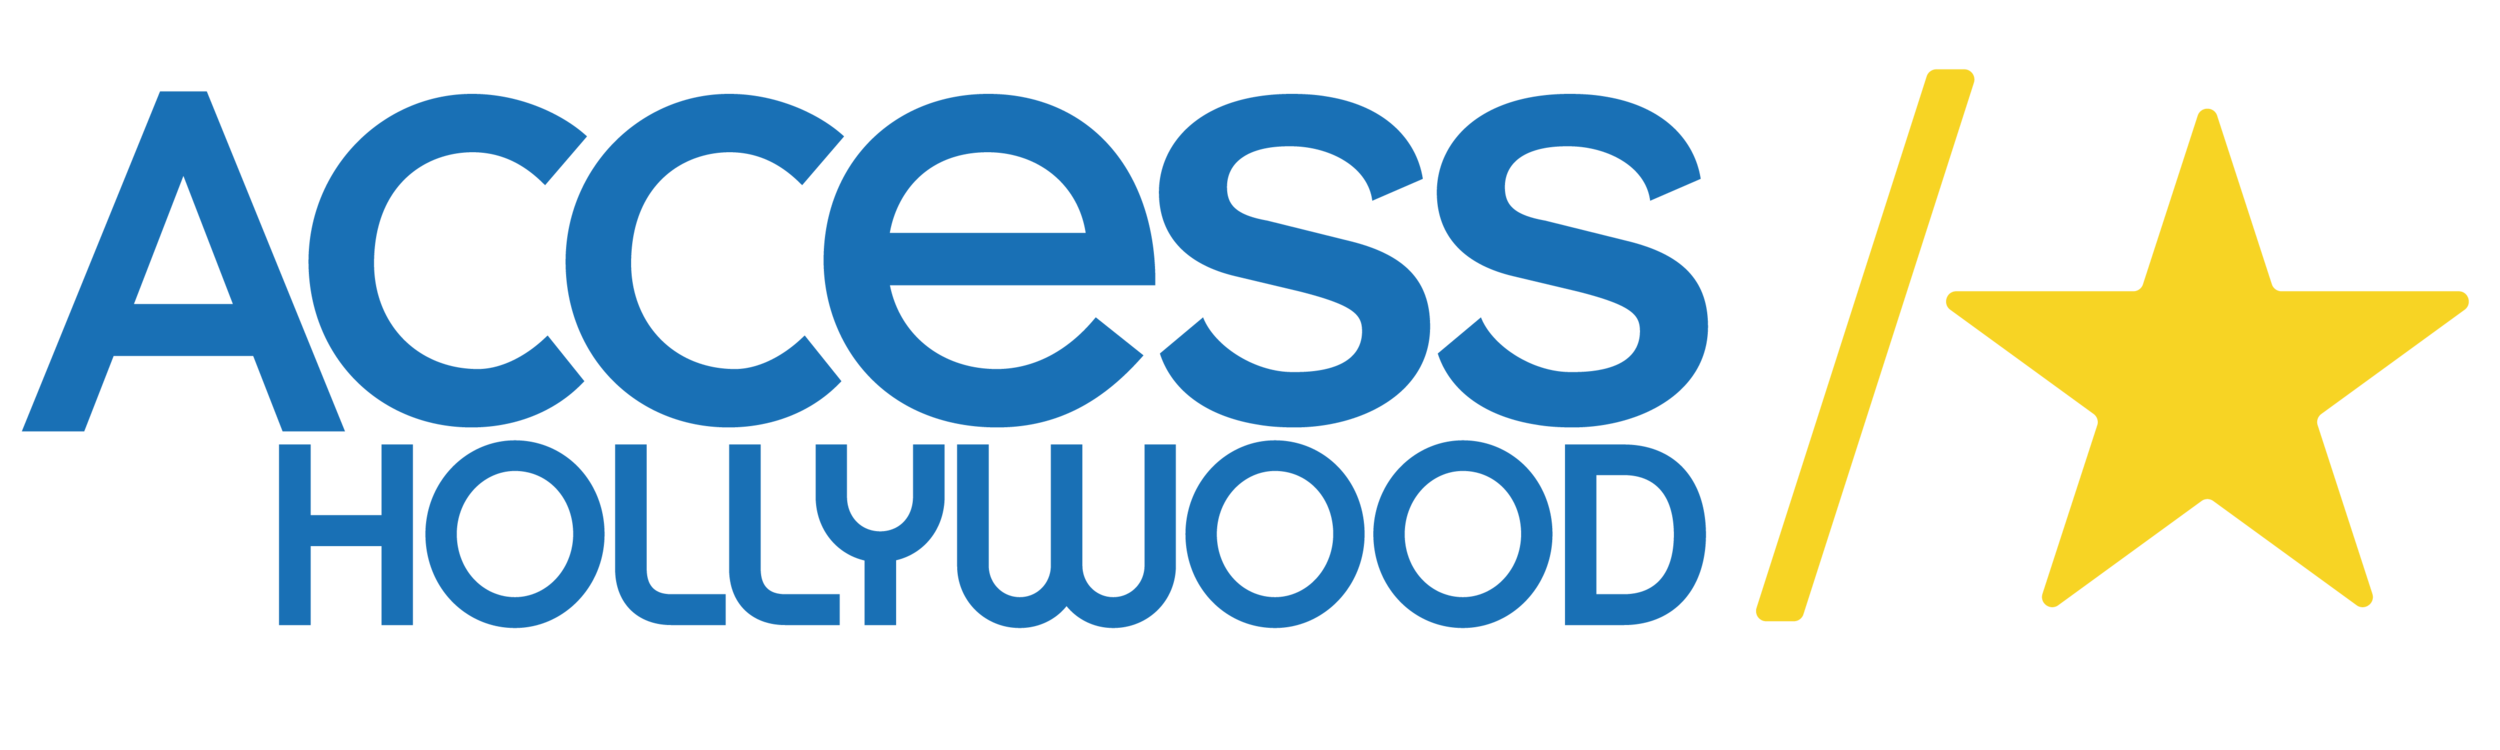 logo-access-hollywood.png